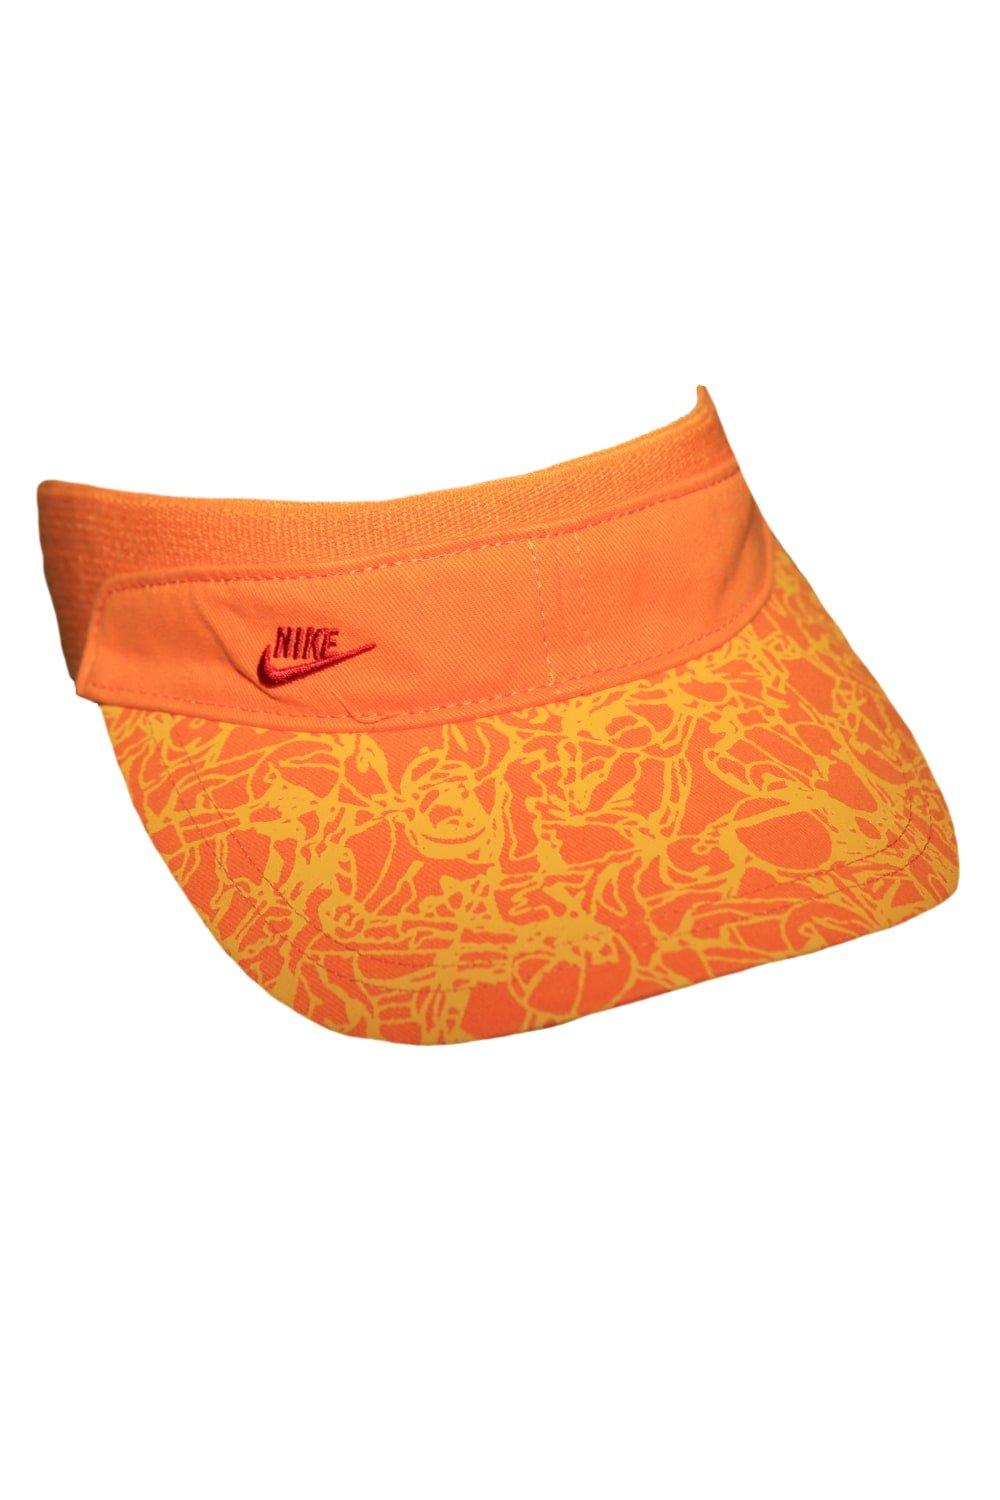 Nike Women's Sun Visor|orange